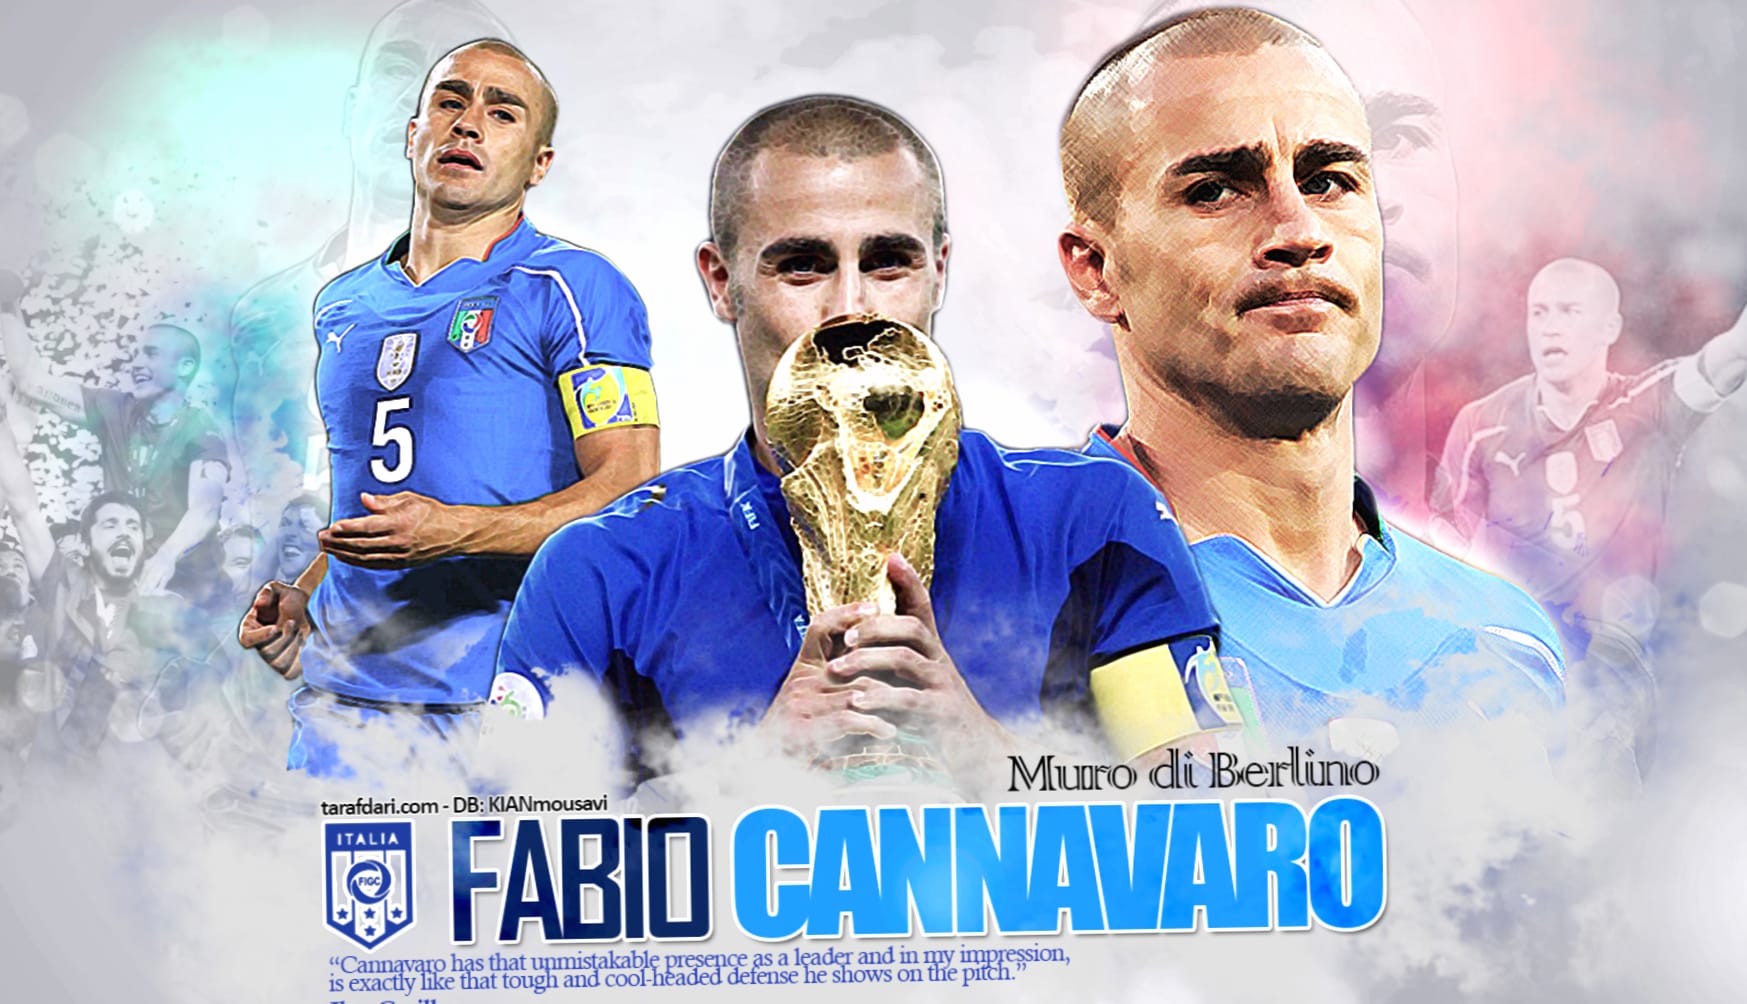 Fabio Cannavaro at 1024 x 1024 iPad size wallpapers HD quality